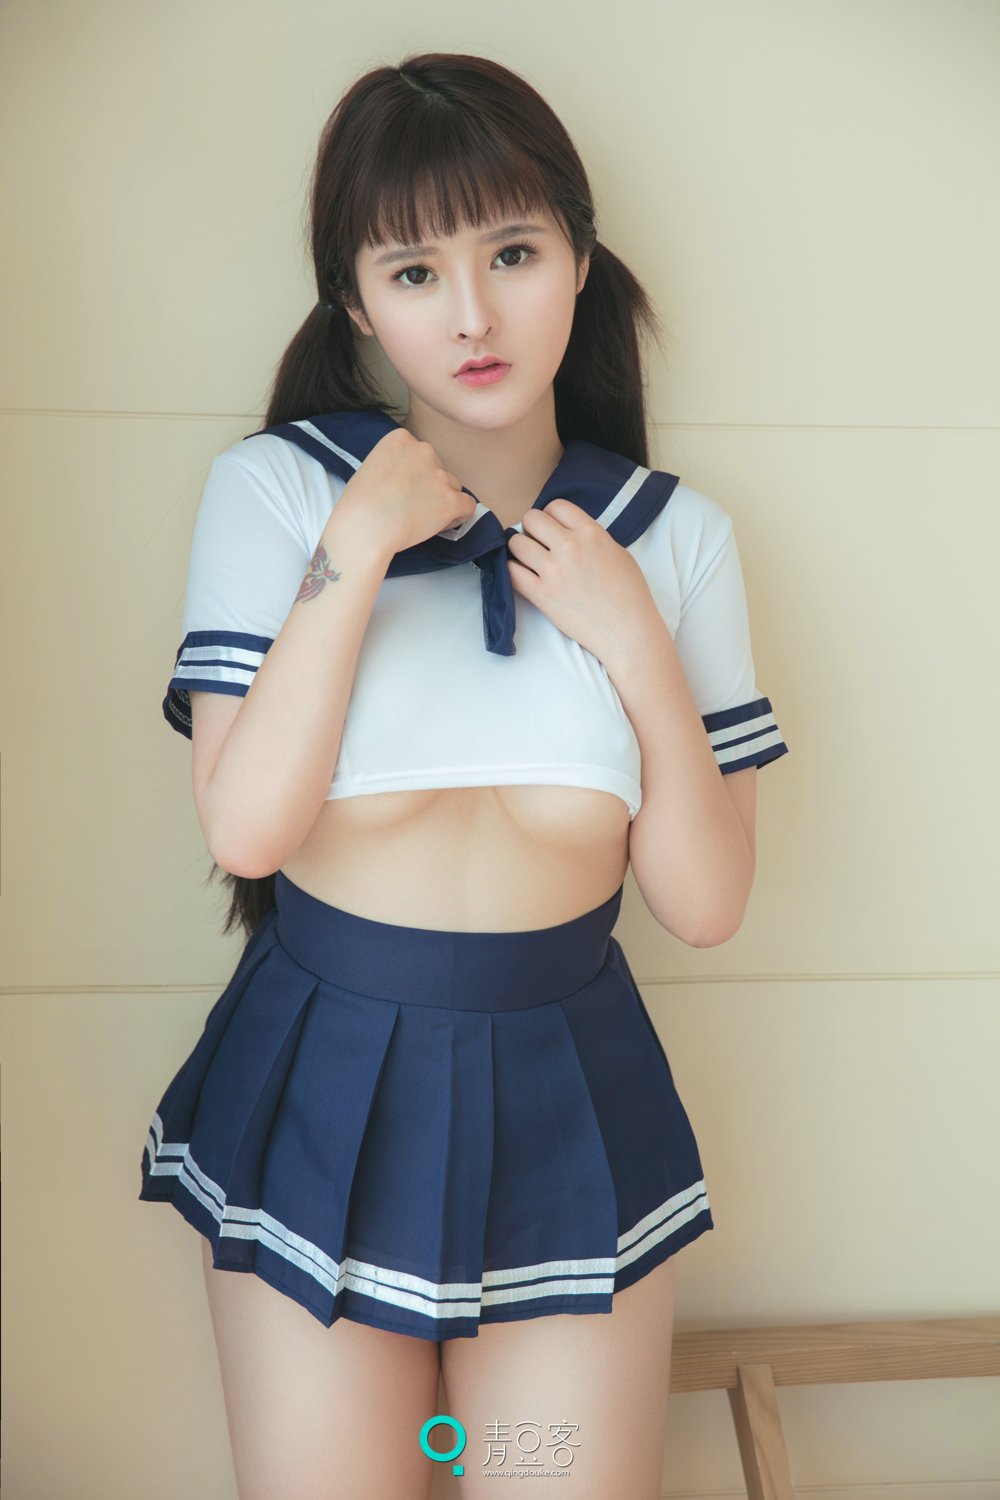 QingDouKe - Student Uniform and Bra